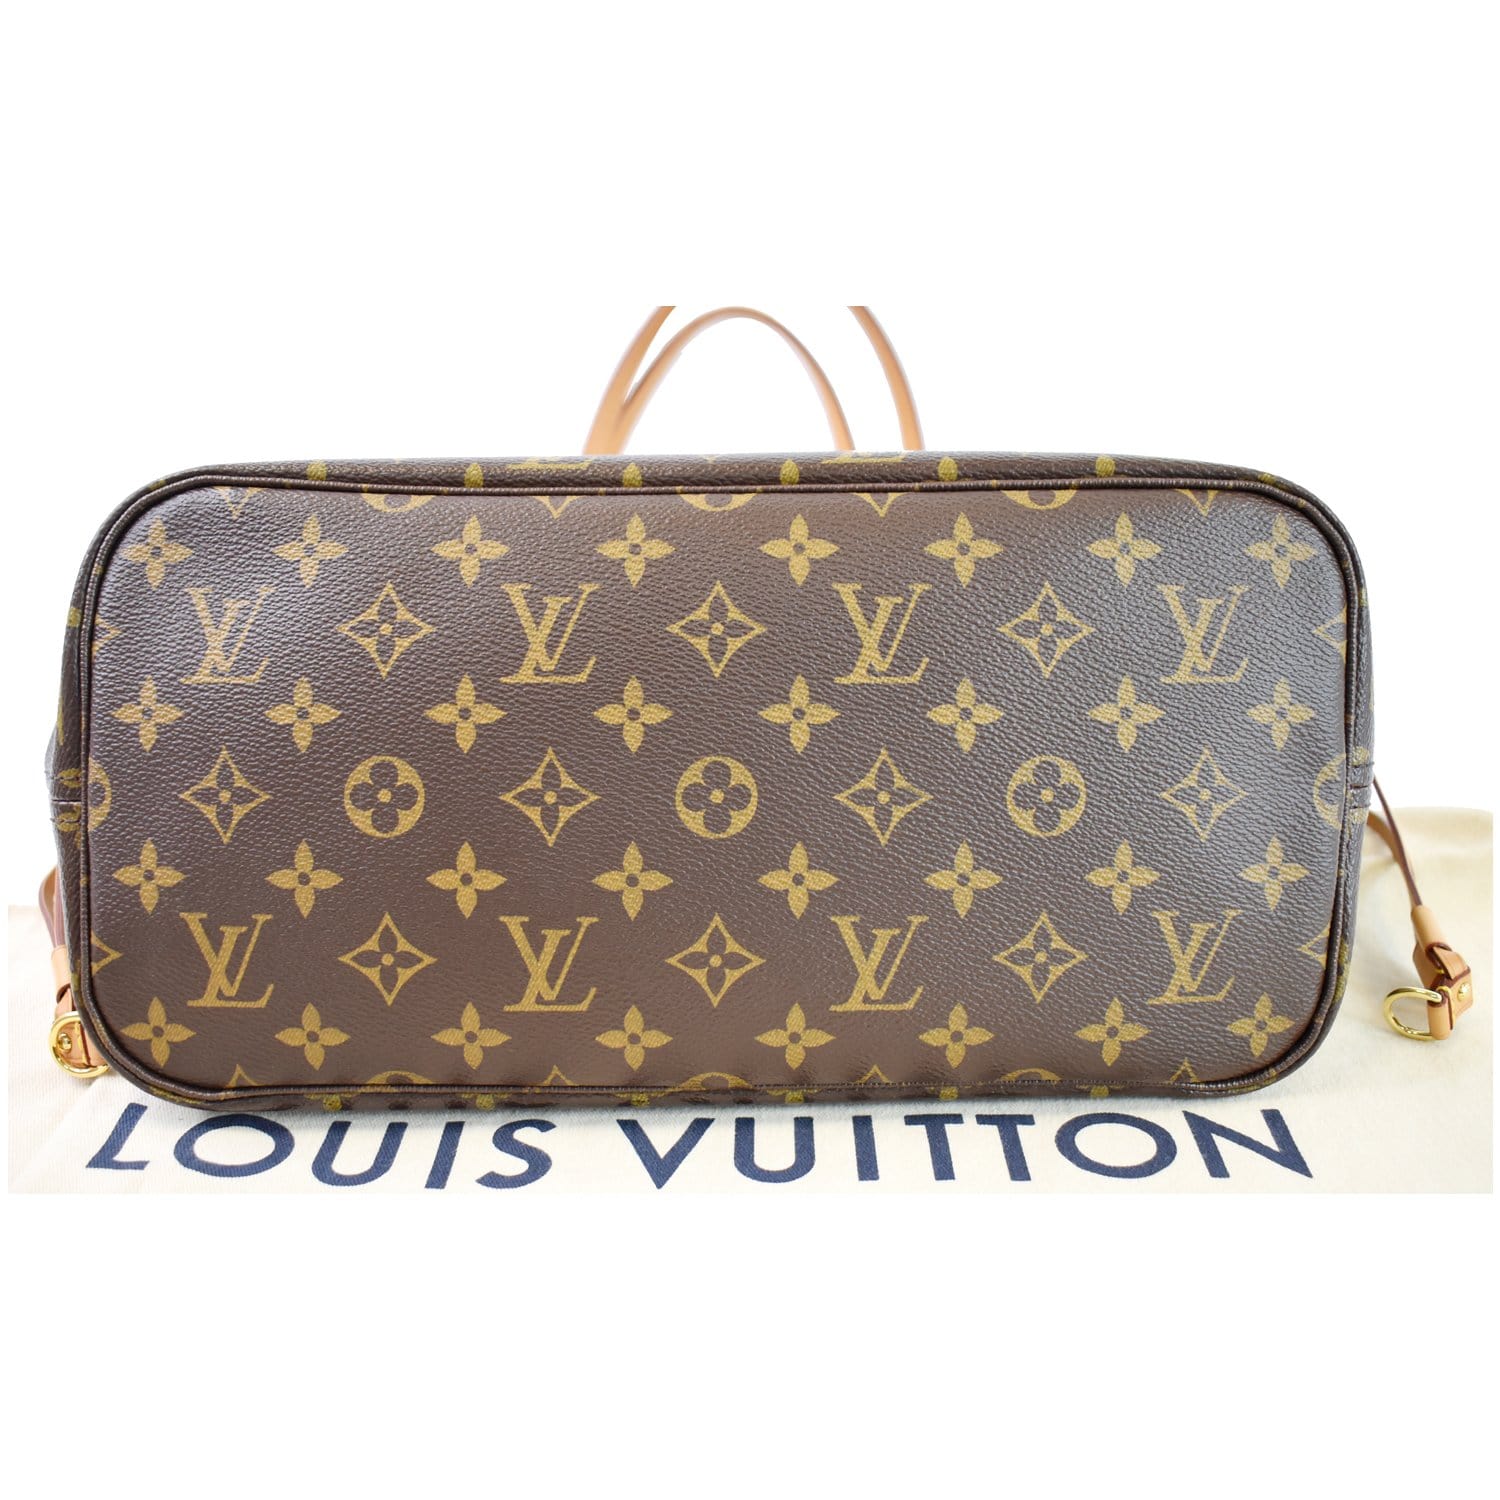 Discount Place - Beautiful HAND BAG 🛍️ Brand : Louis Vuitton